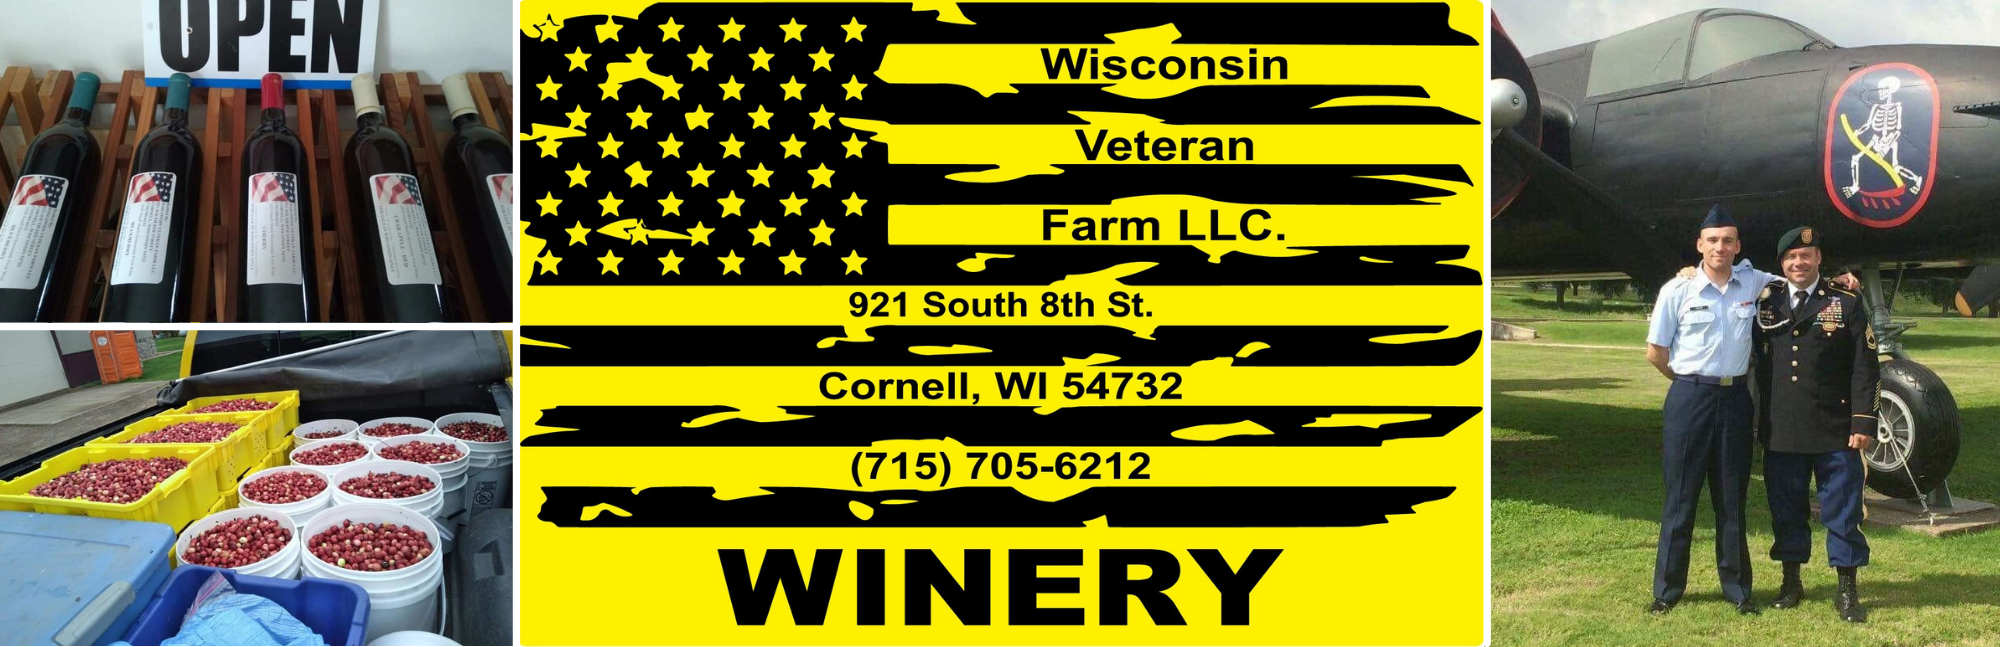 Wisconsin Veteran Farm LLC